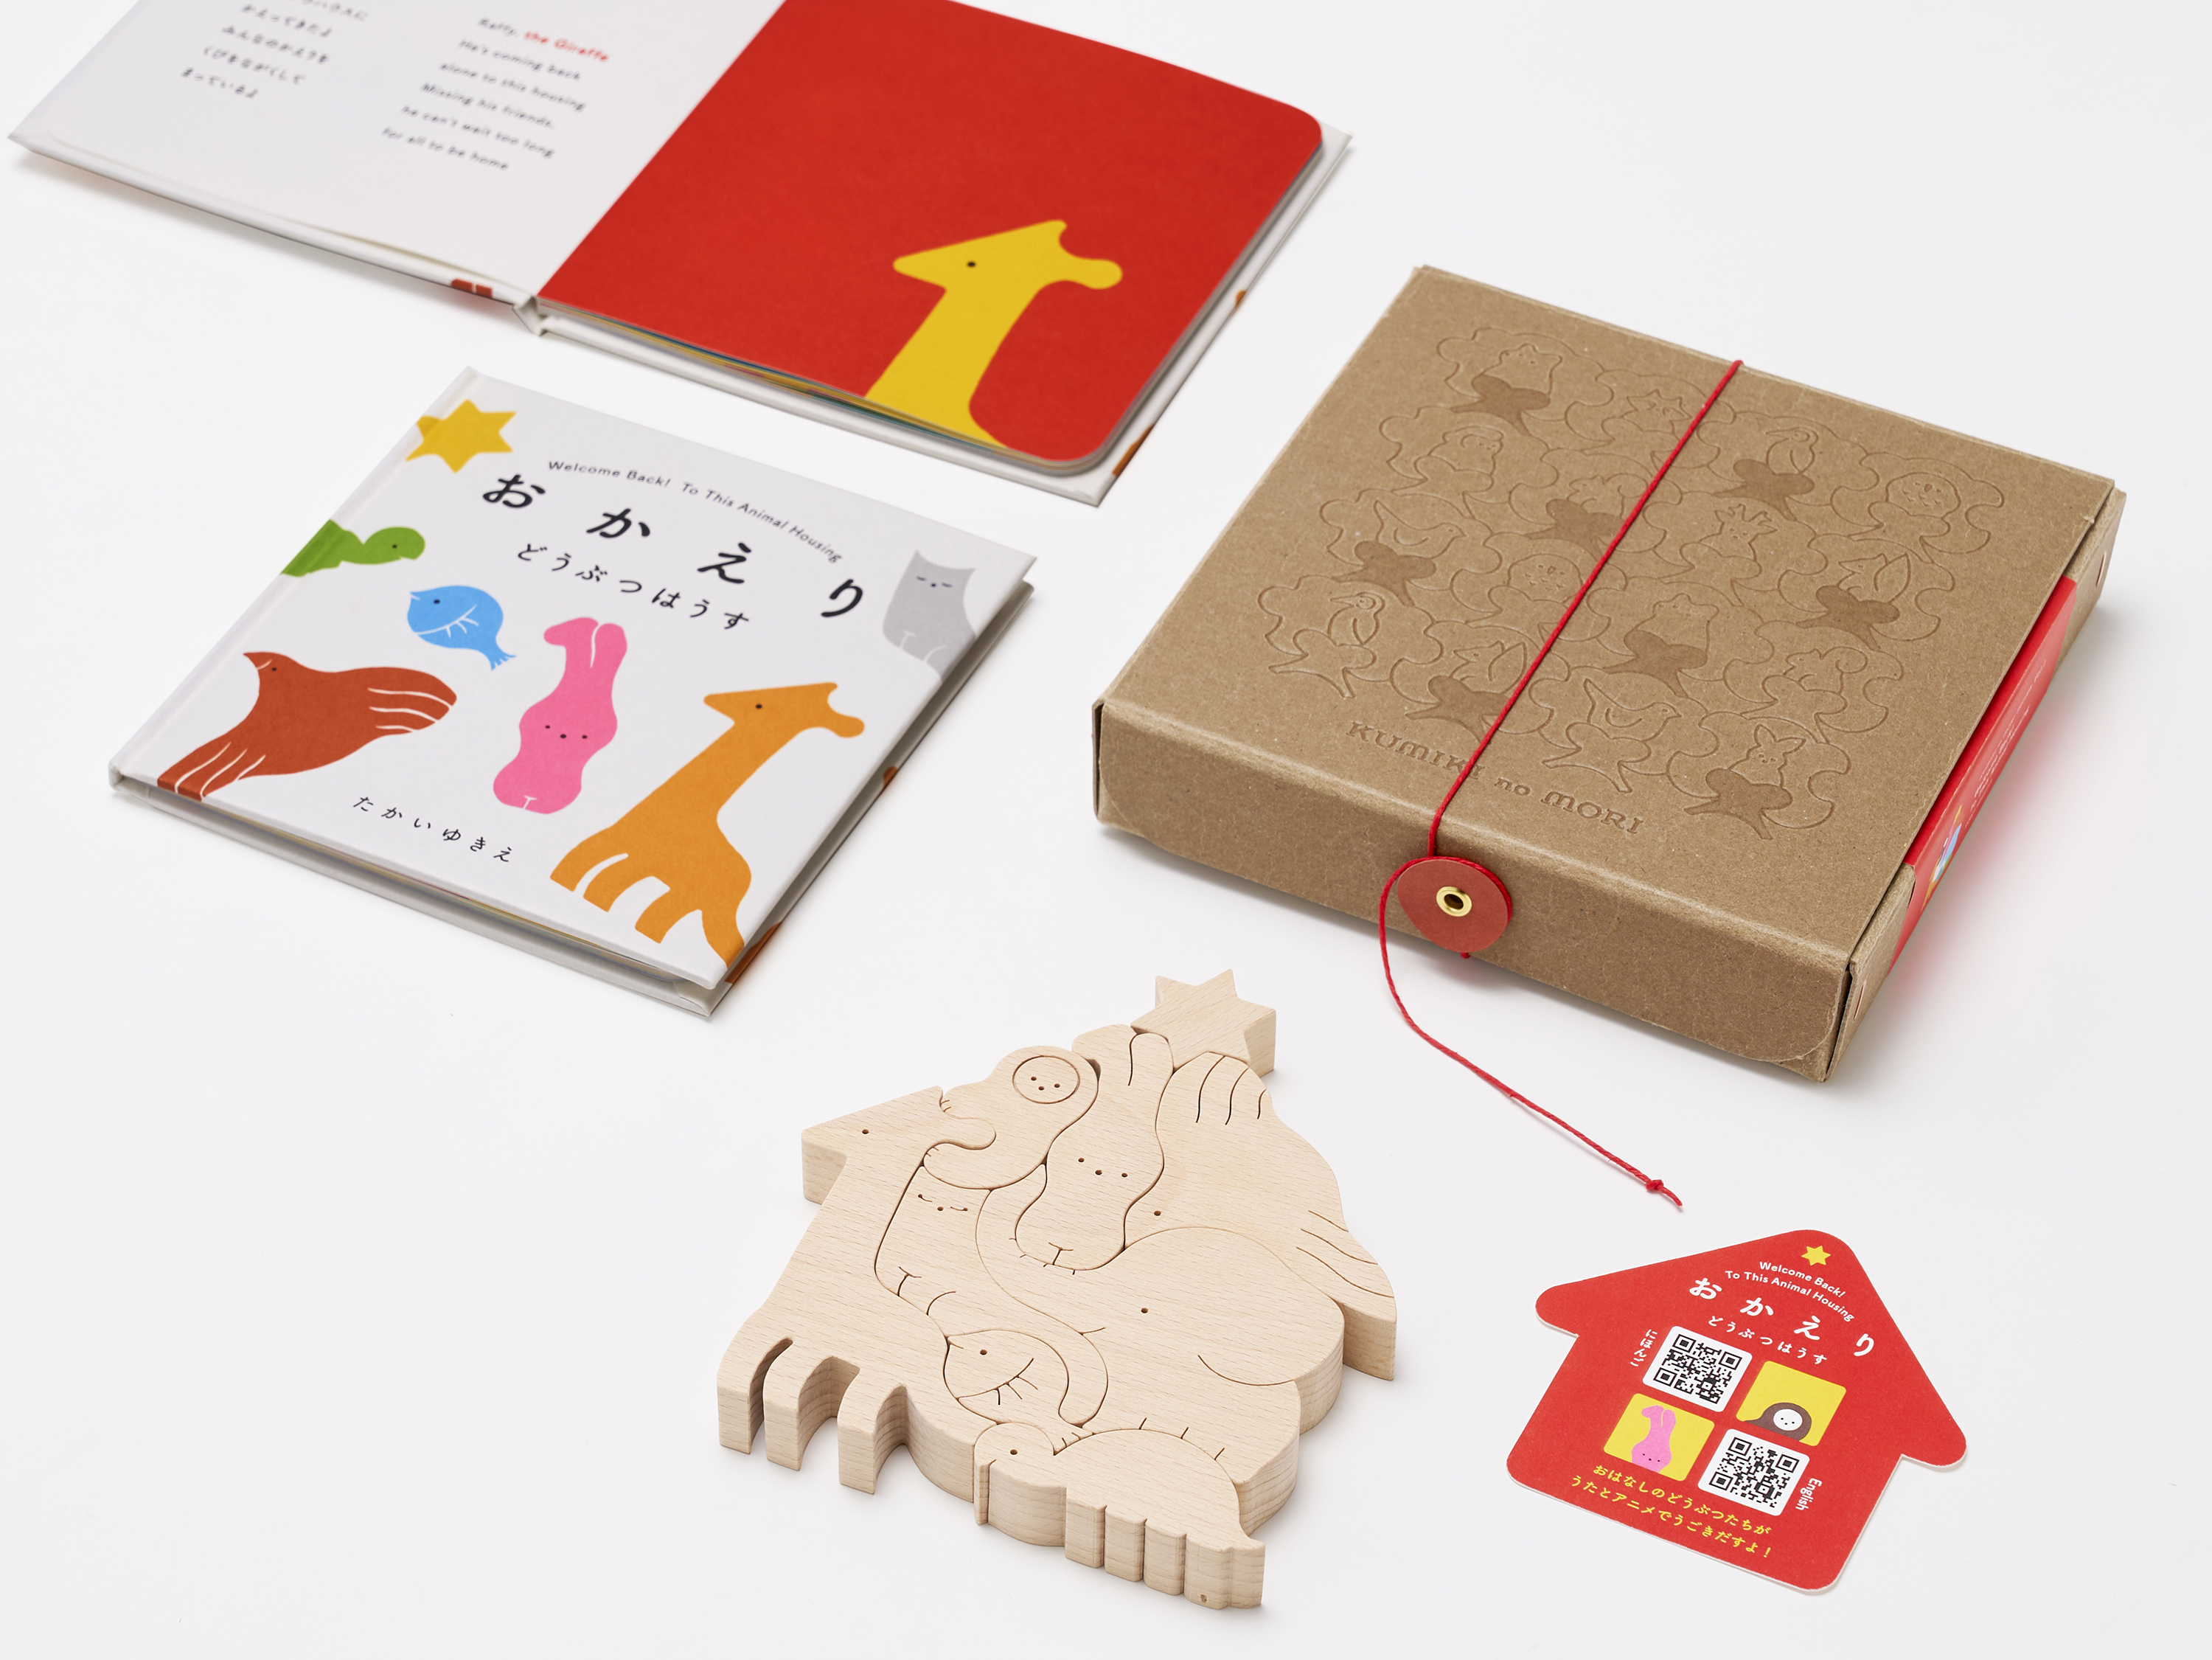 "The Animal Kumi-Kit/Educational Wooden Toy"